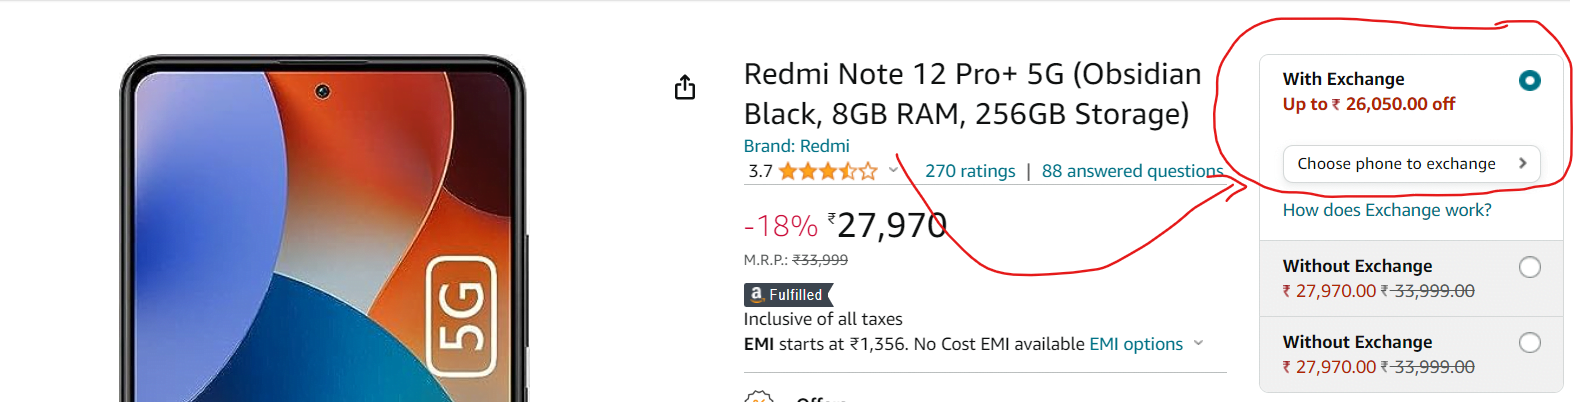 Redmi Note 12 Pro Plus 5G With Exchange